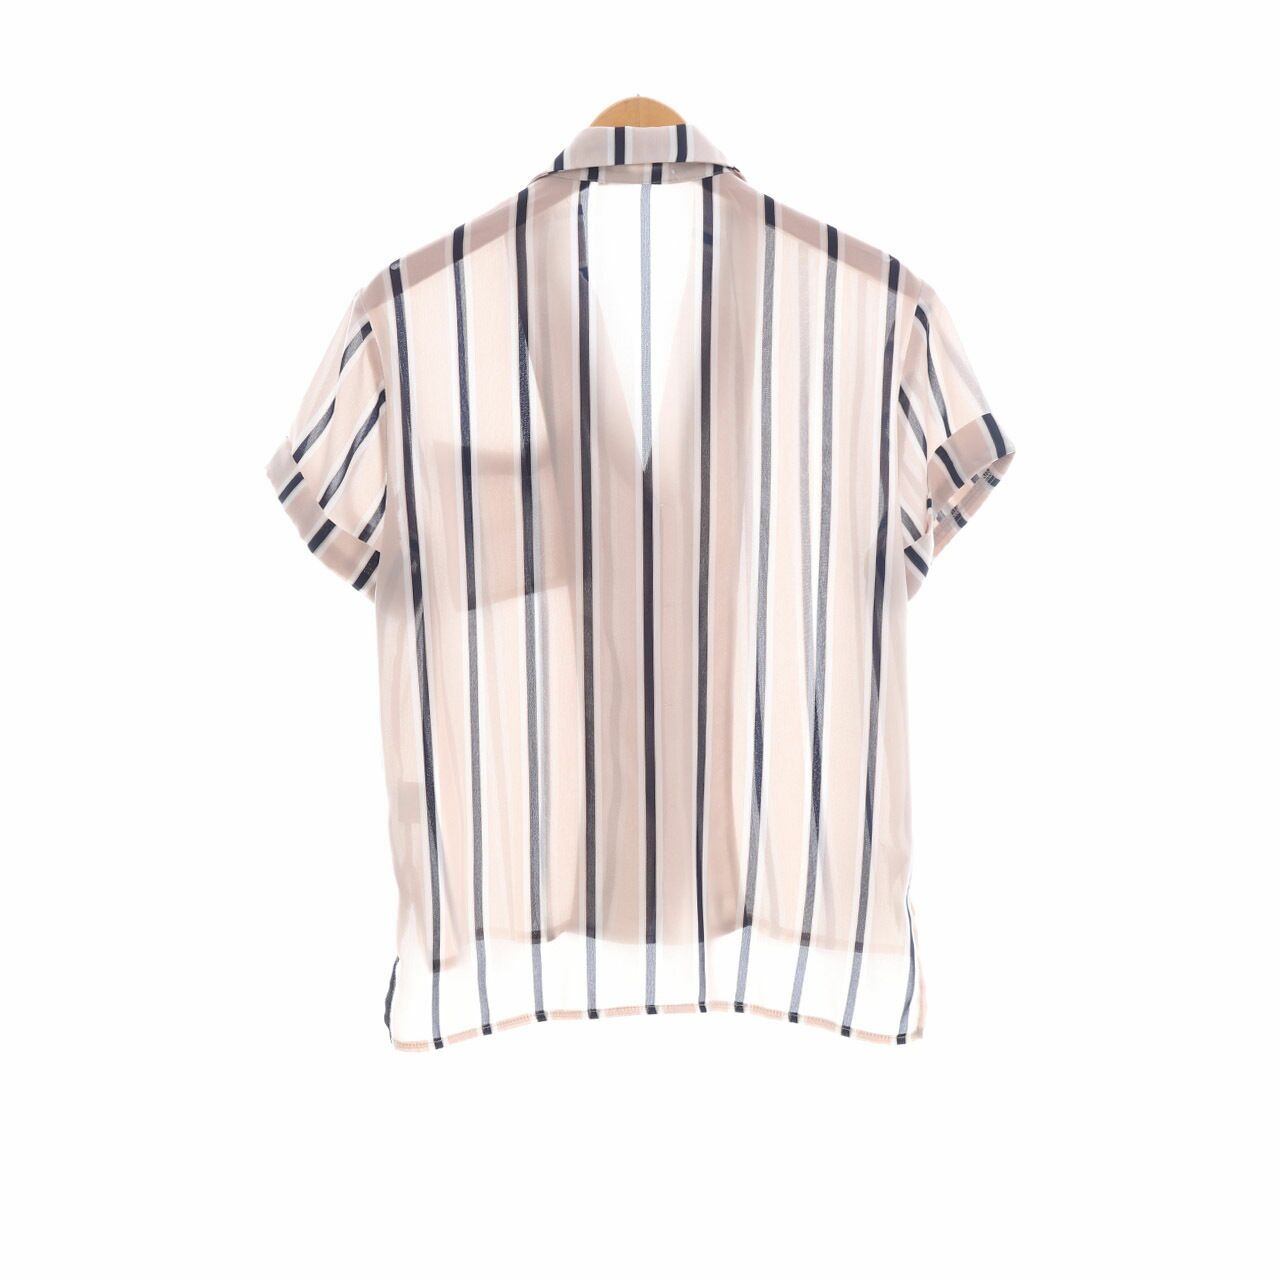 Brandy Melville Beige/Navy Striped Shirt